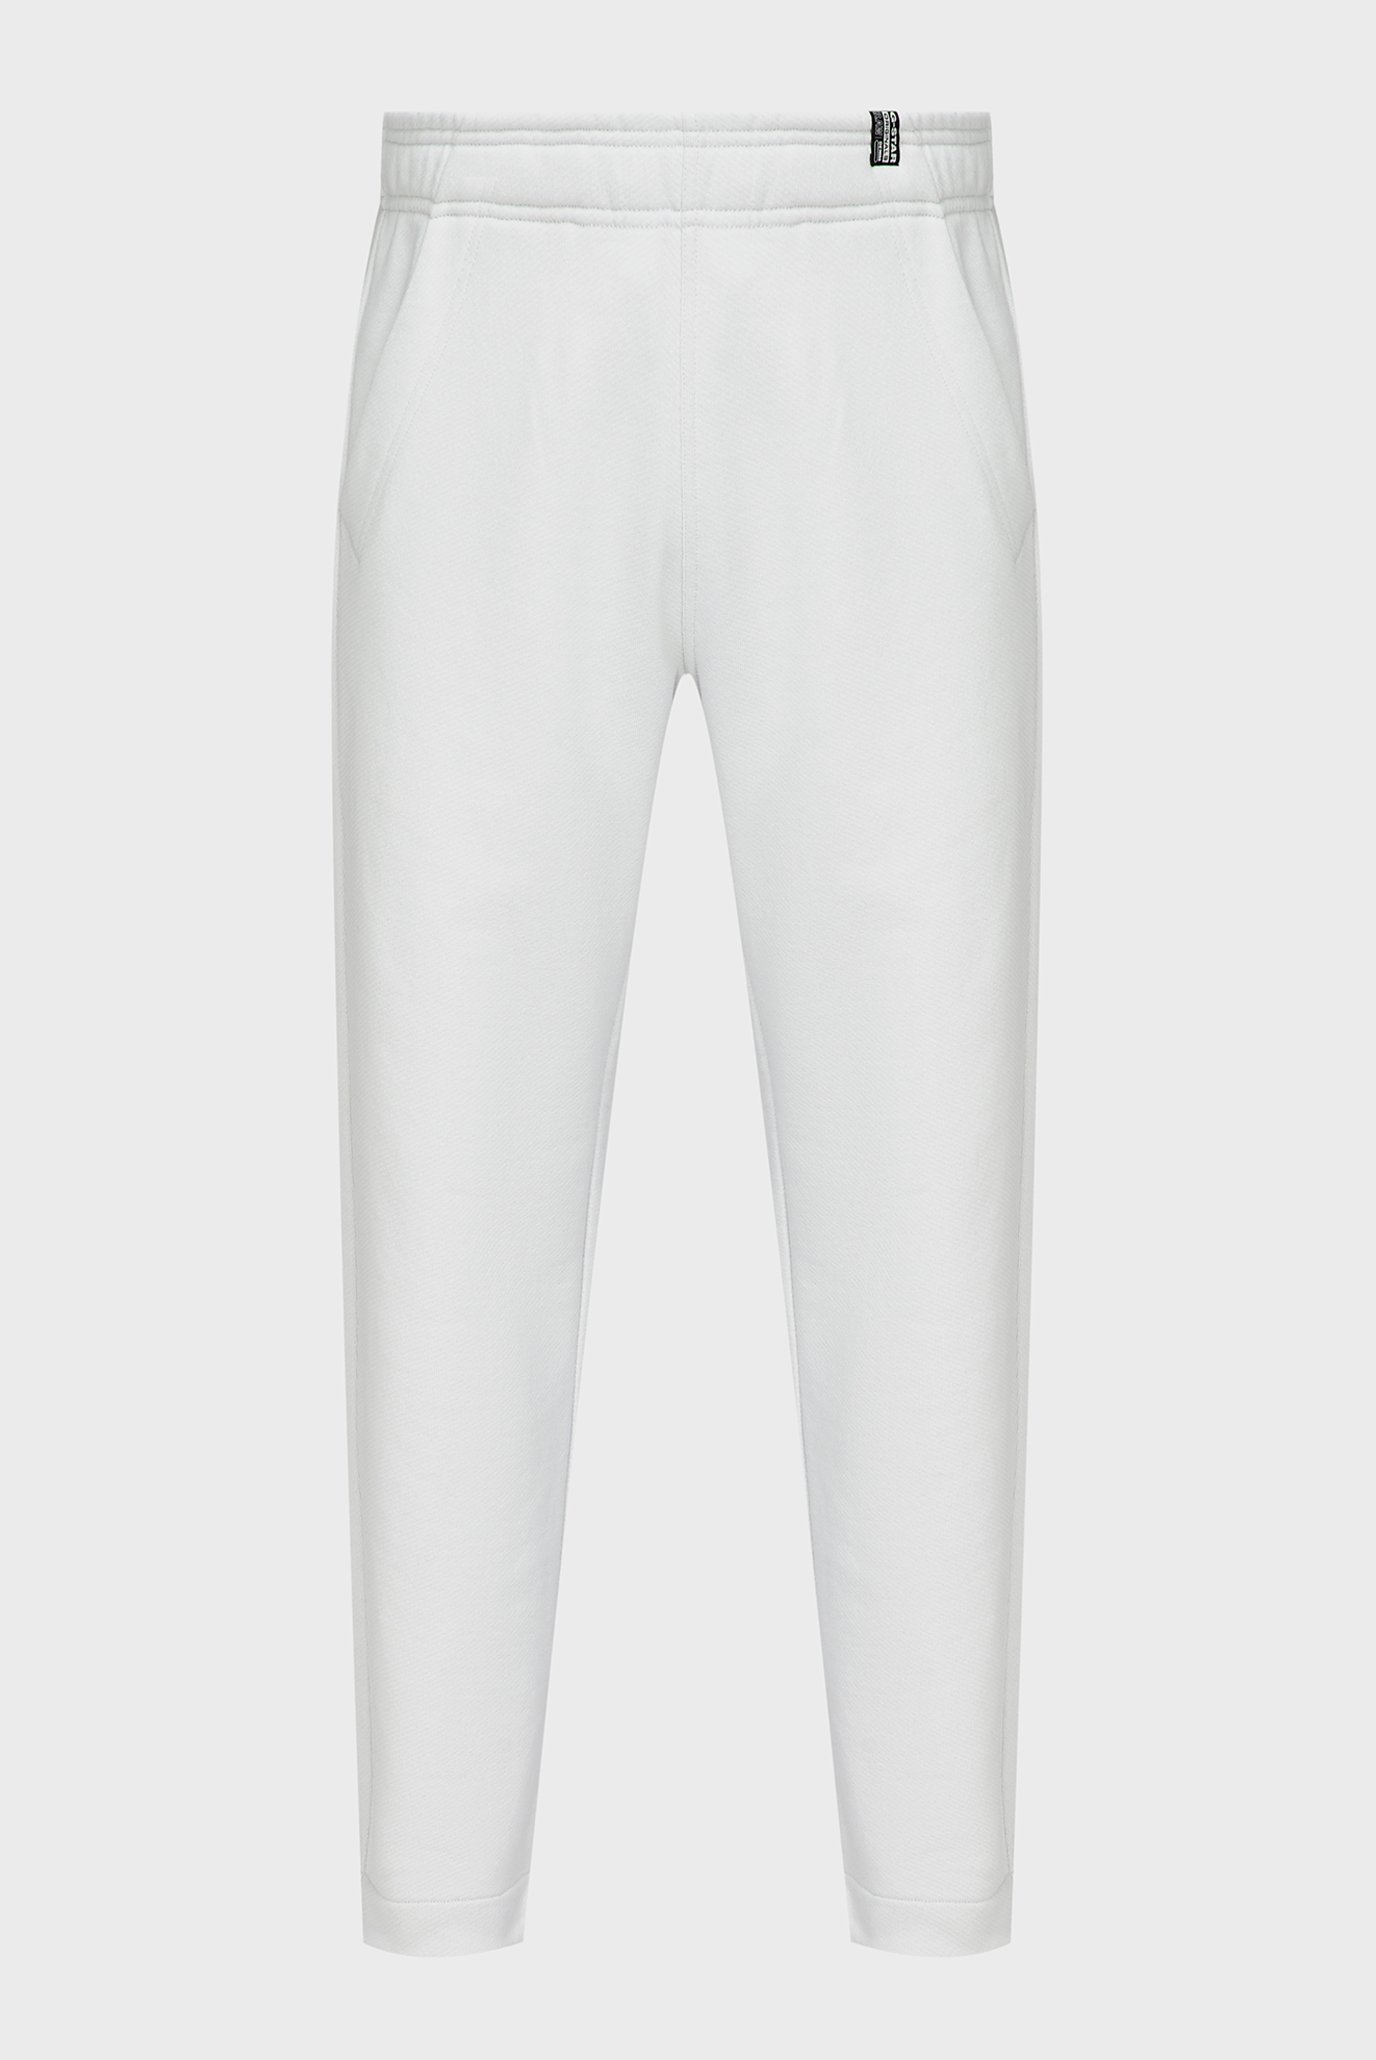 Белые спортивные брюки Essential loose tapered sw pant (унисекс) 1